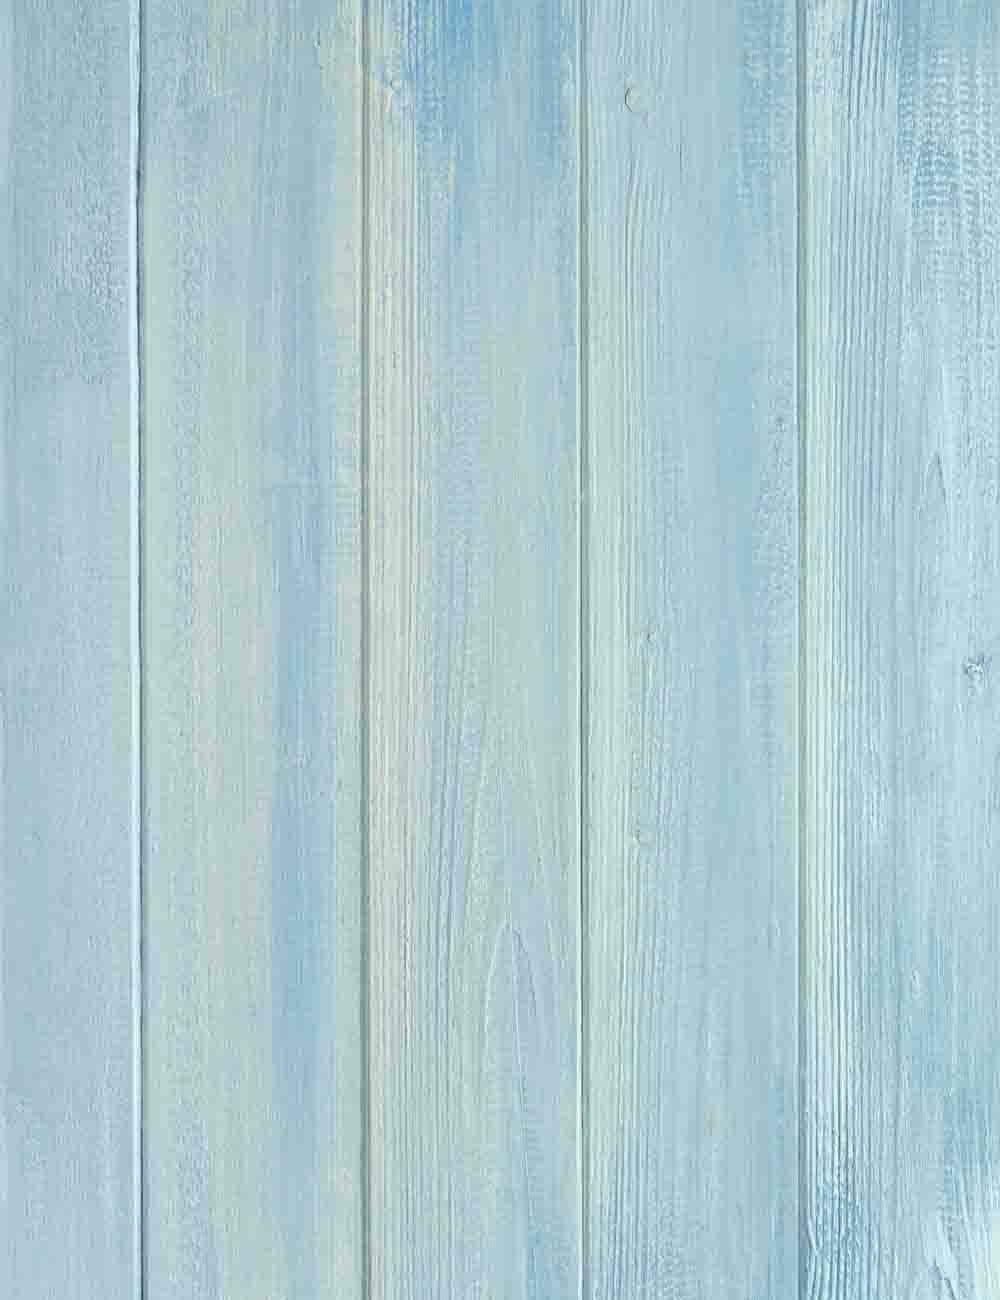 Light Sky Blue Wood Floor Texture Backdrop For Photography Shopbackdrop